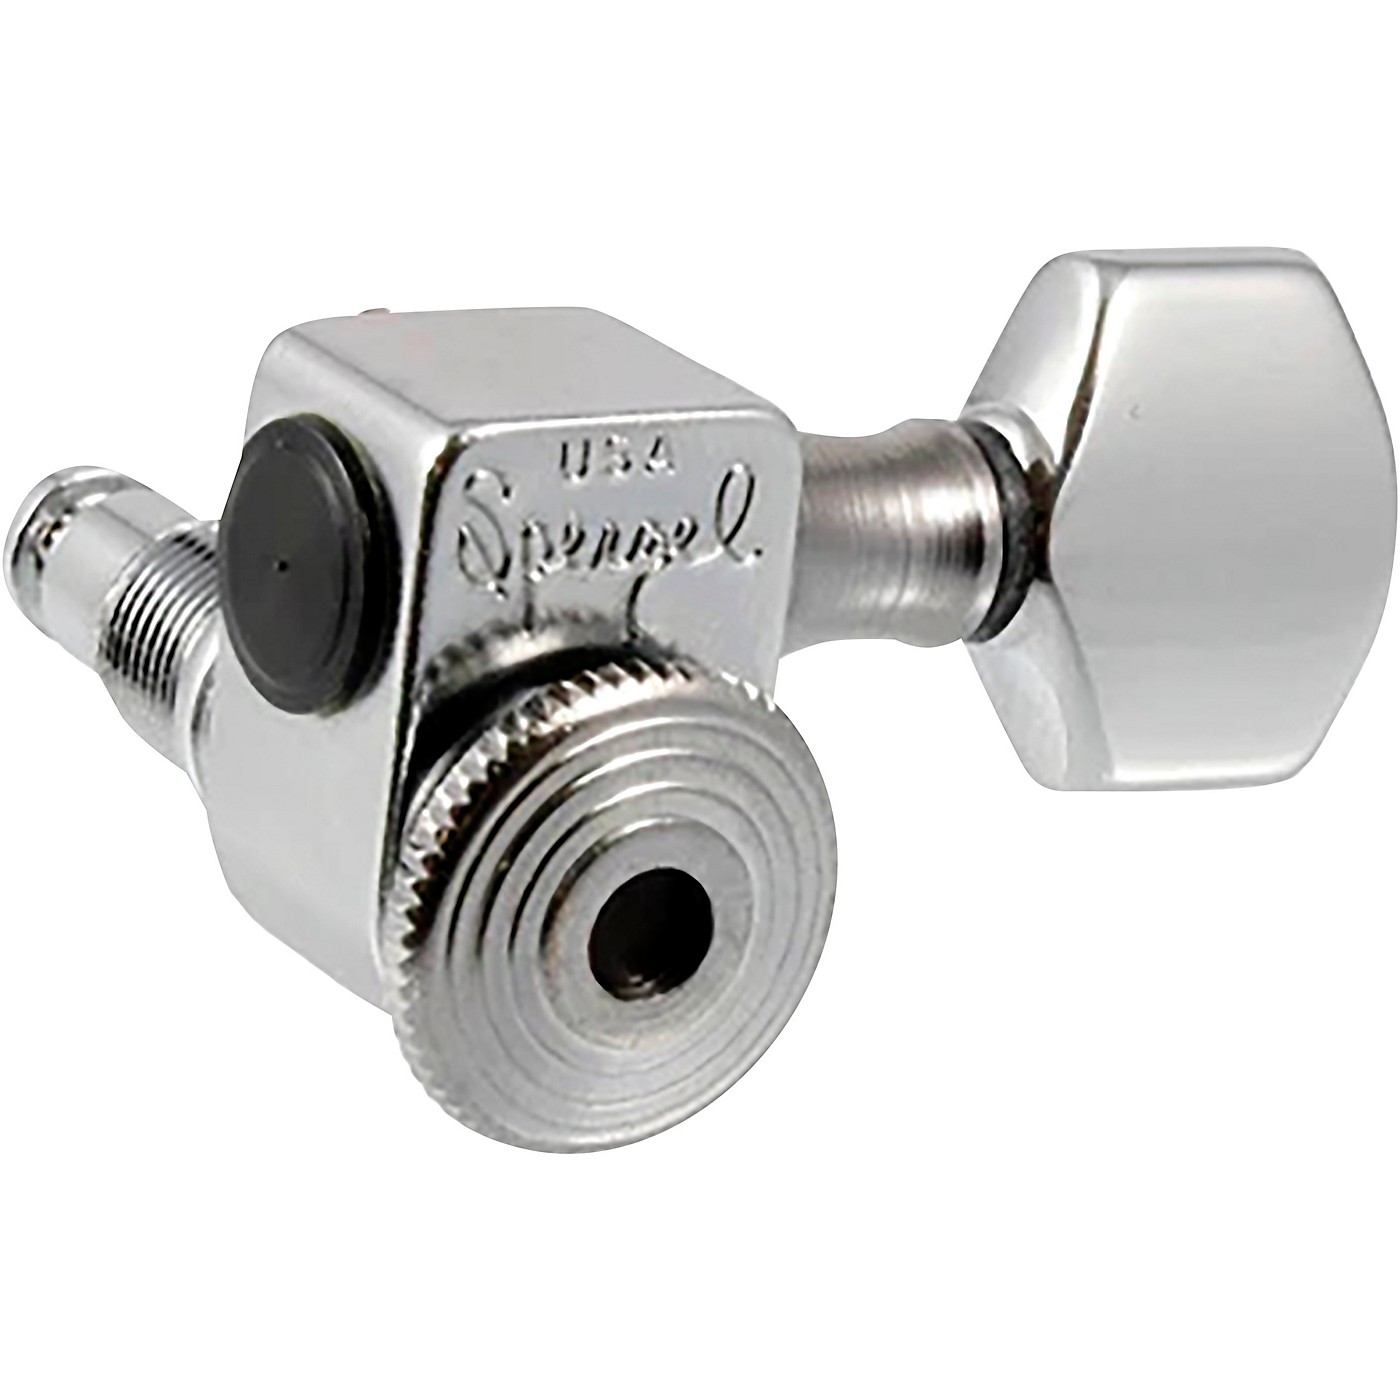 Allparts TK-7467 Sperzel 6-in-Line Locking Tuners in Chrome thumbnail